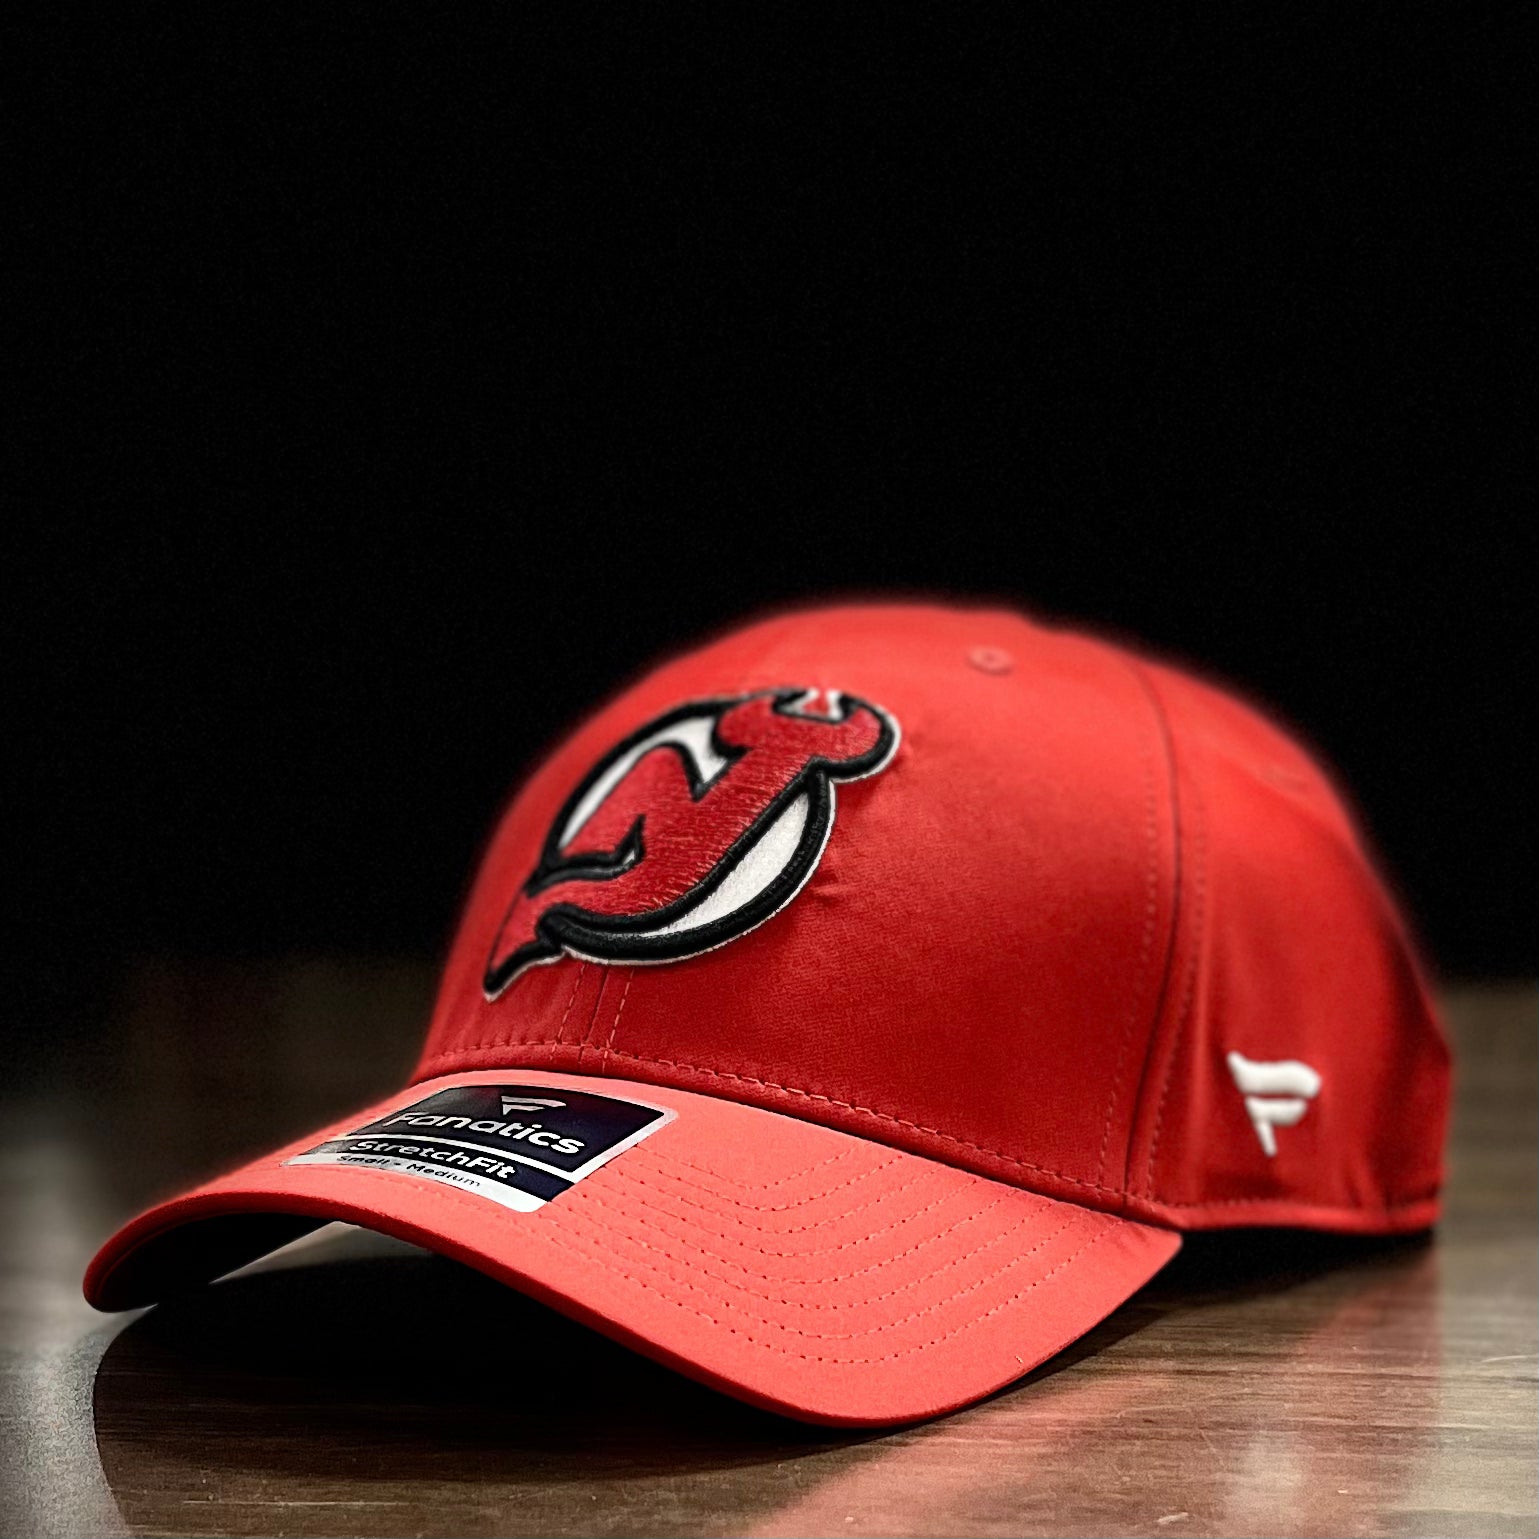 New Jersey Devils '47 Team Franchise Fitted Hat - Black